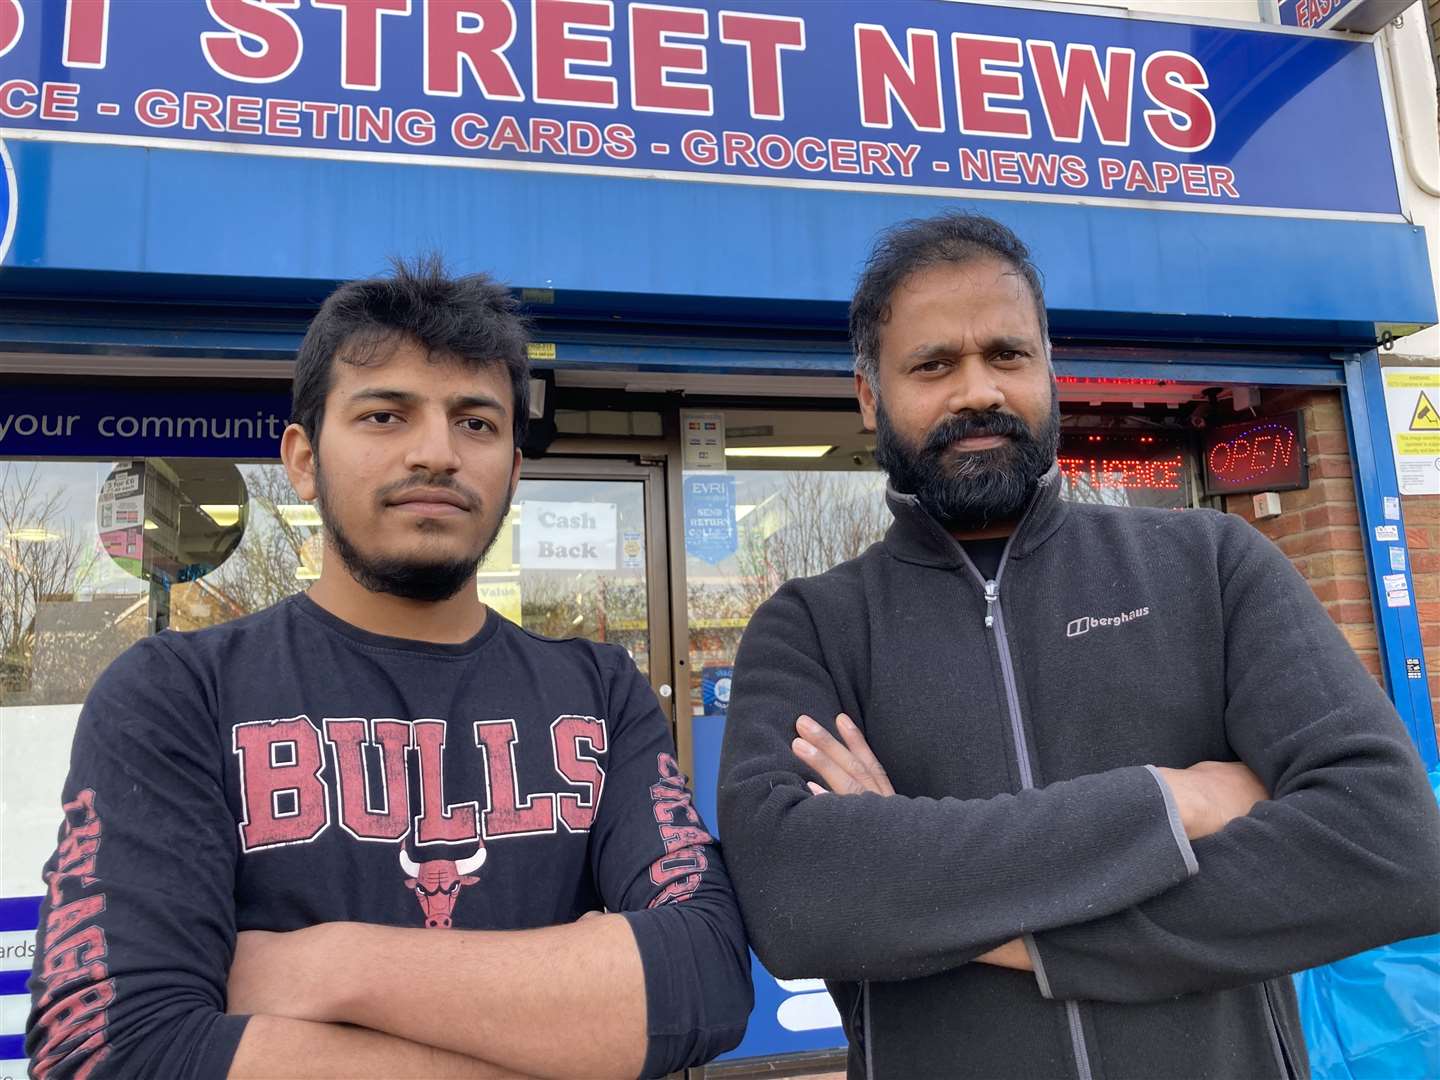 East Street News boss Nimal Ranachandran, right, and shop supervisor Sugash Selladurai outside the shop in Sittingbourne